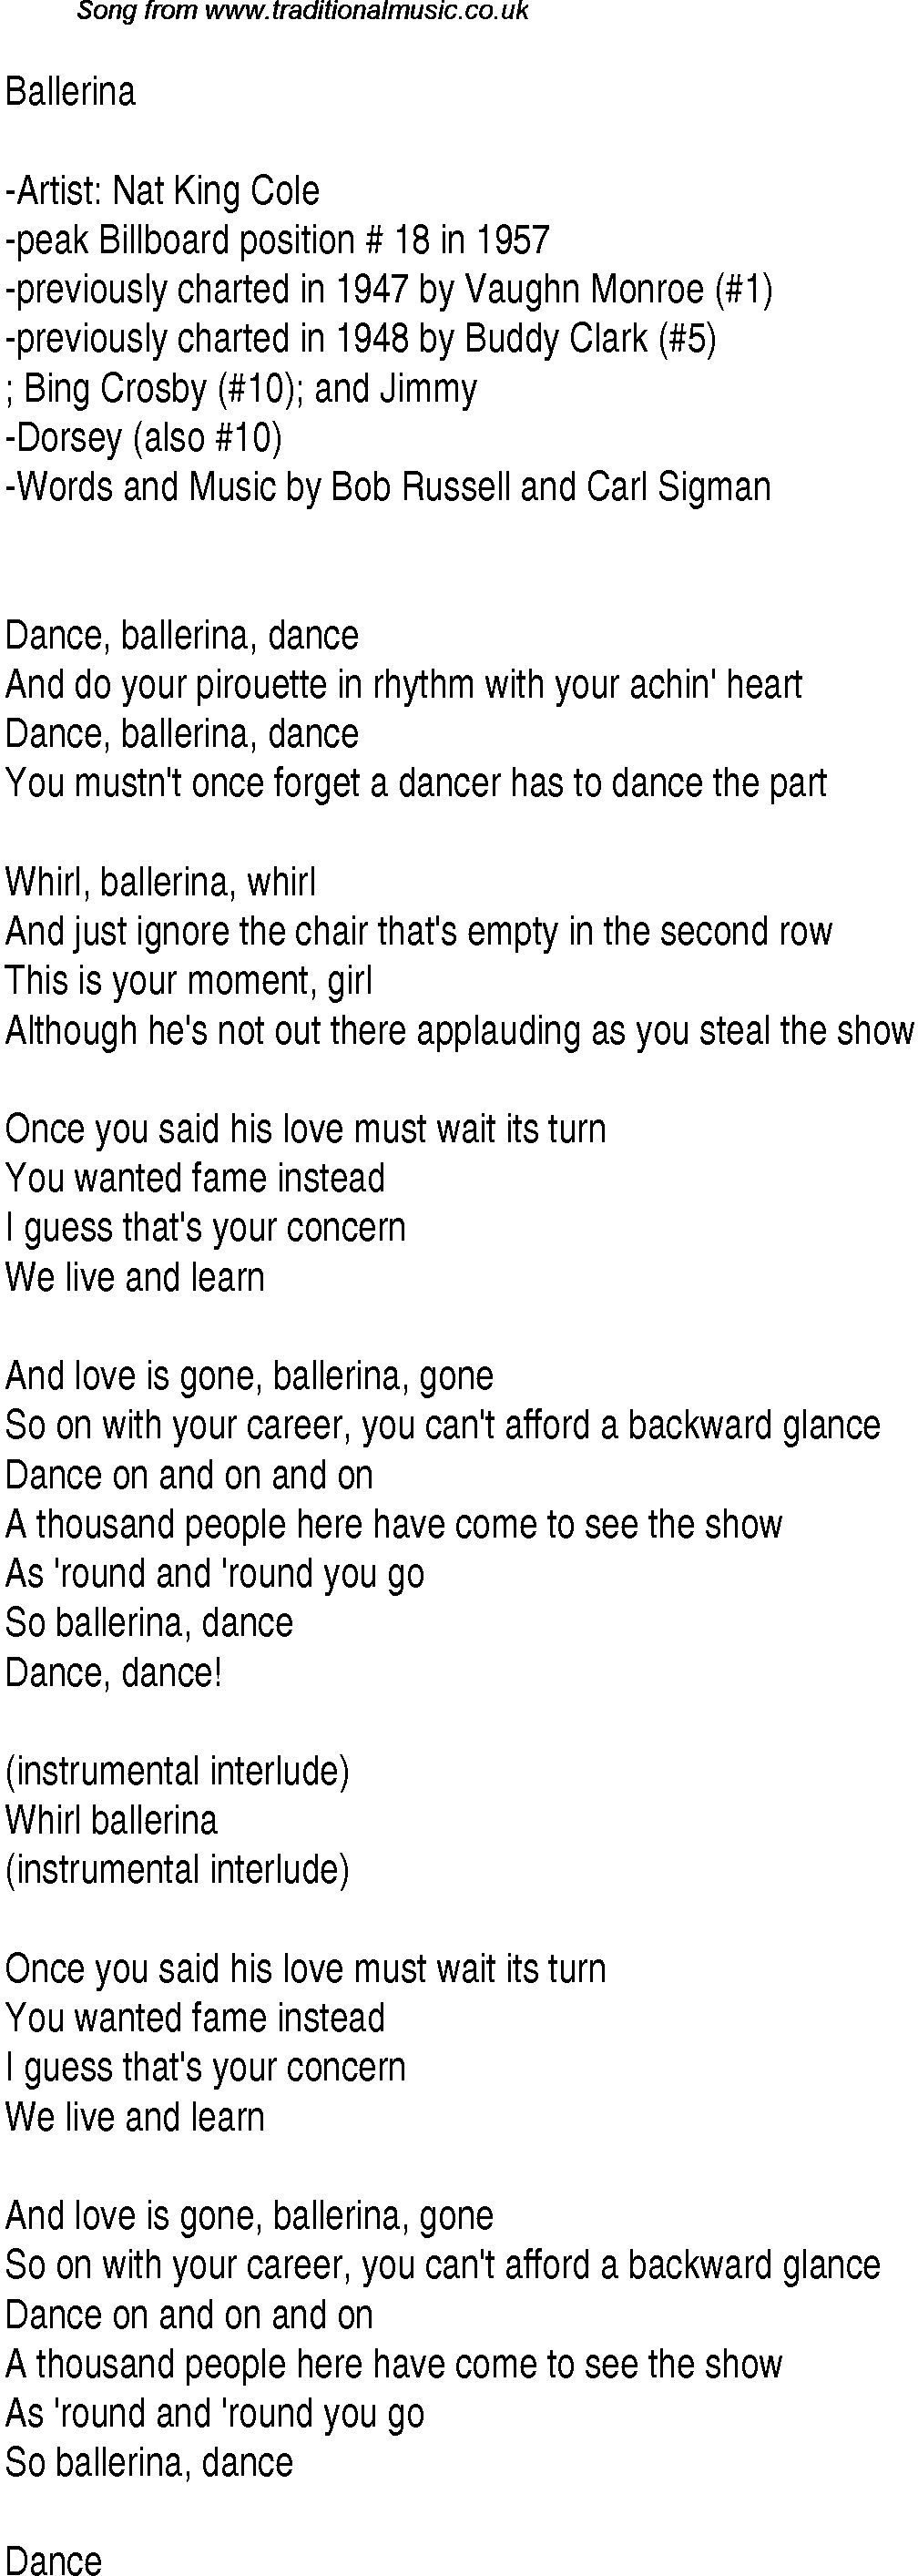 Music charts top songs 1947 - lyrics for Ballerina